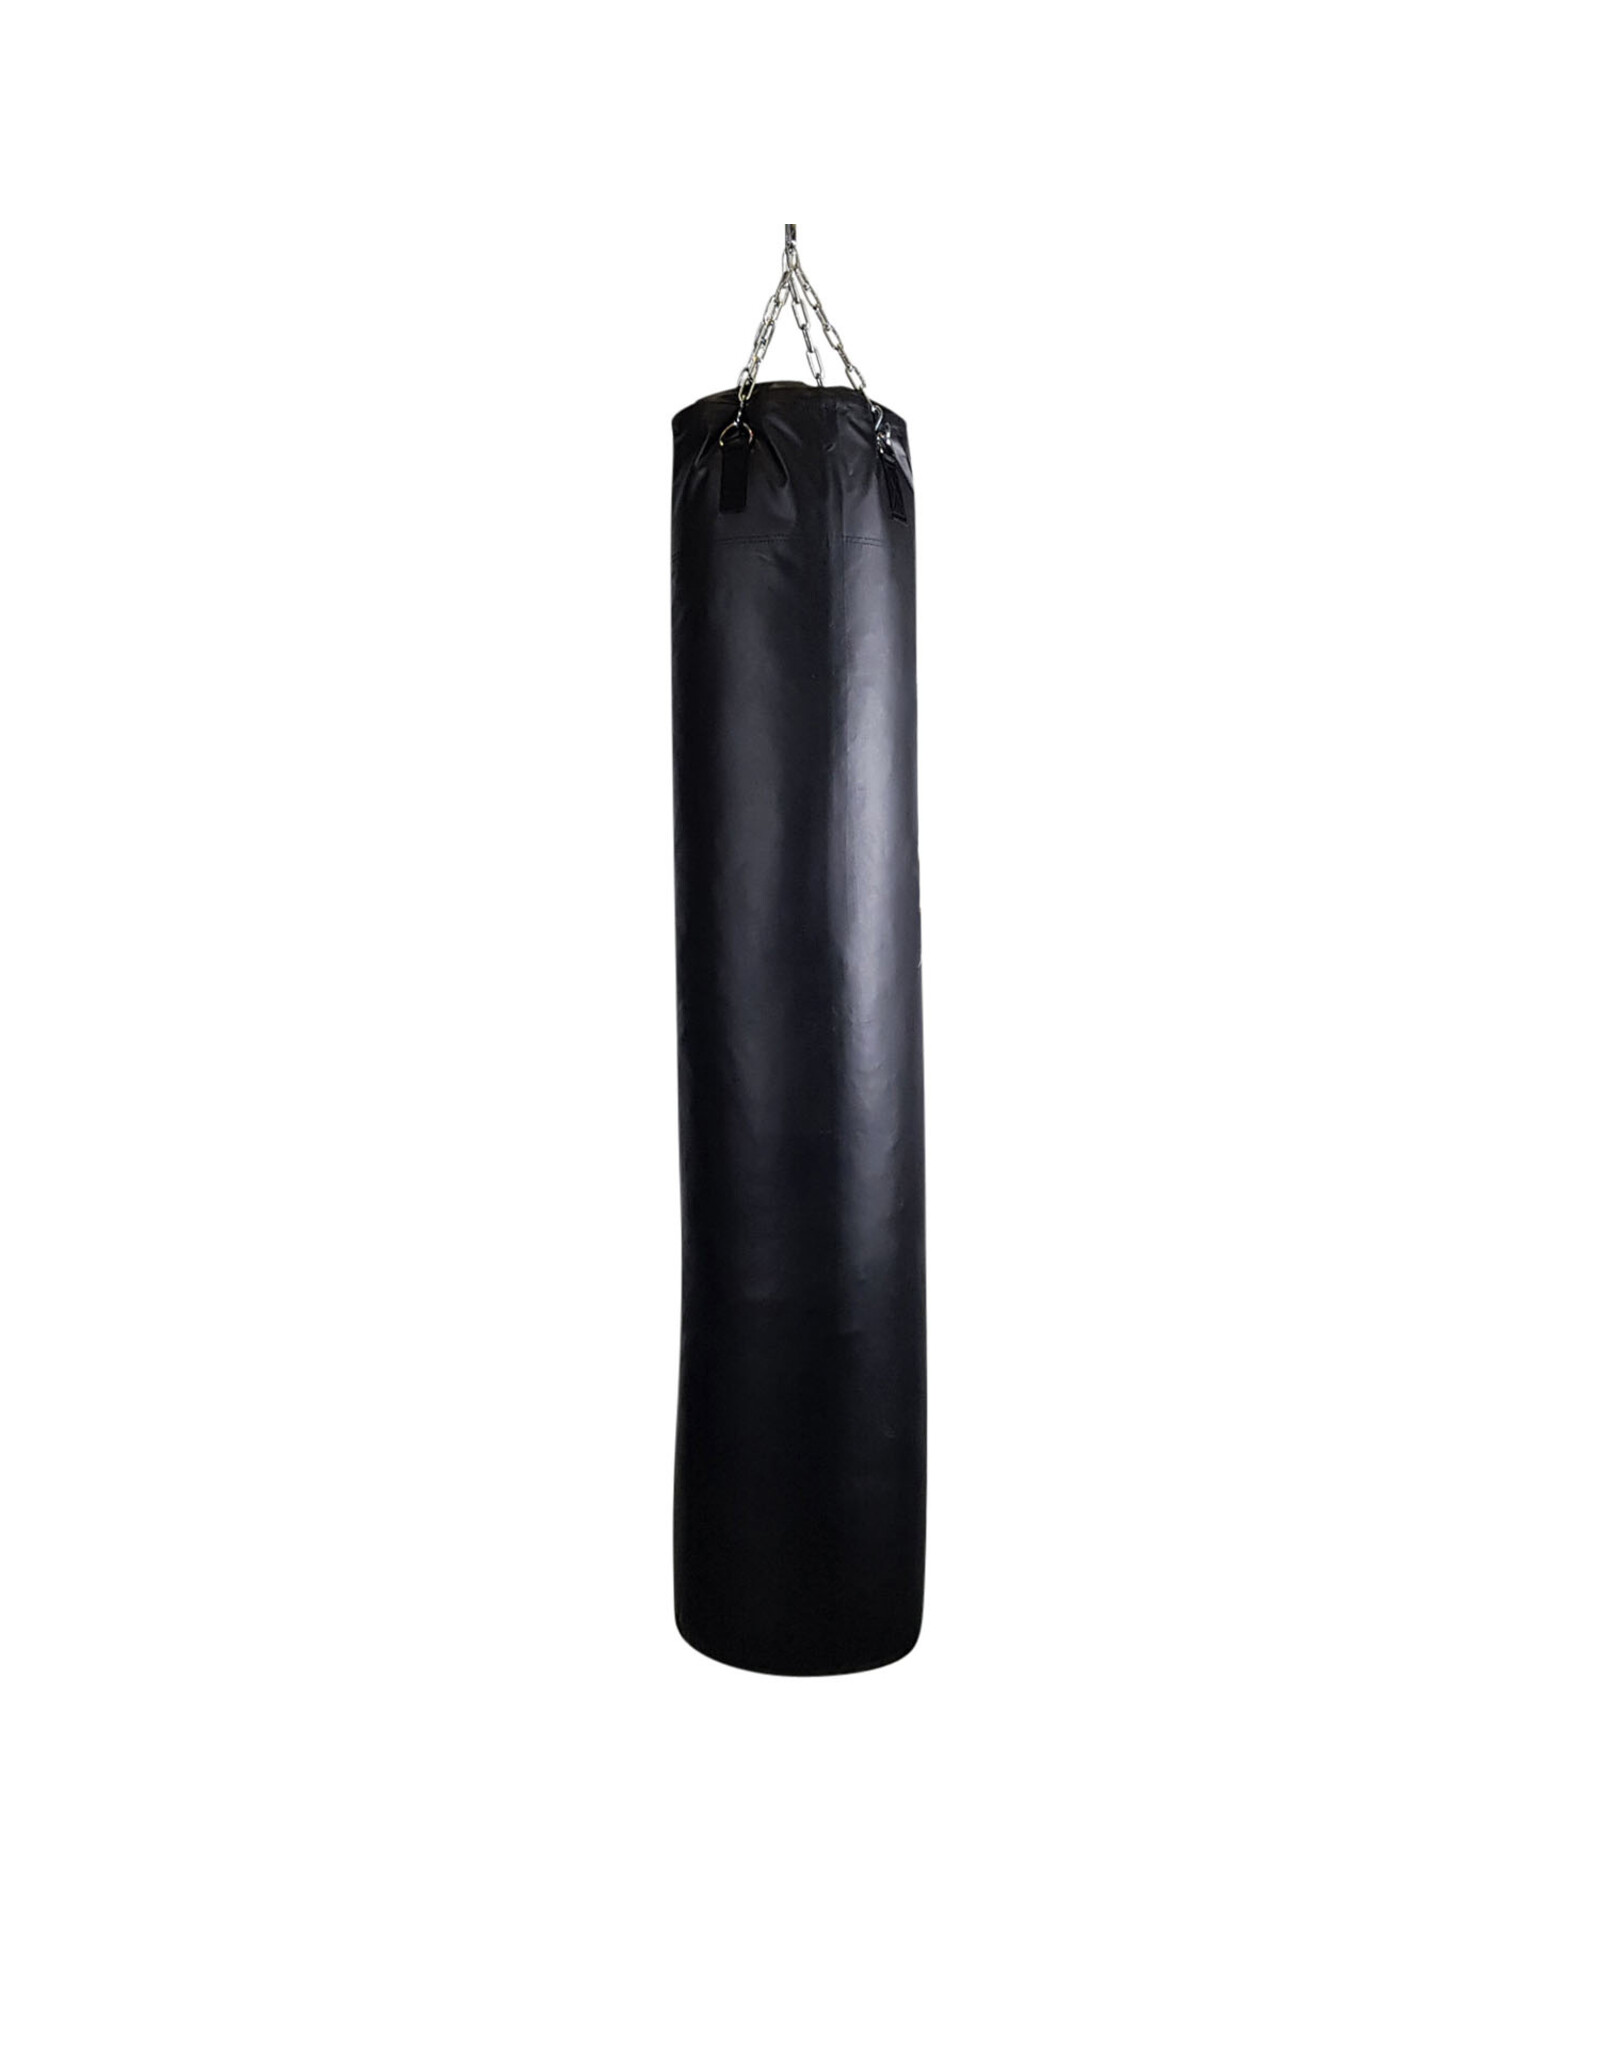 Tunturi Boxing Bag with Chain 70 - 180 cm